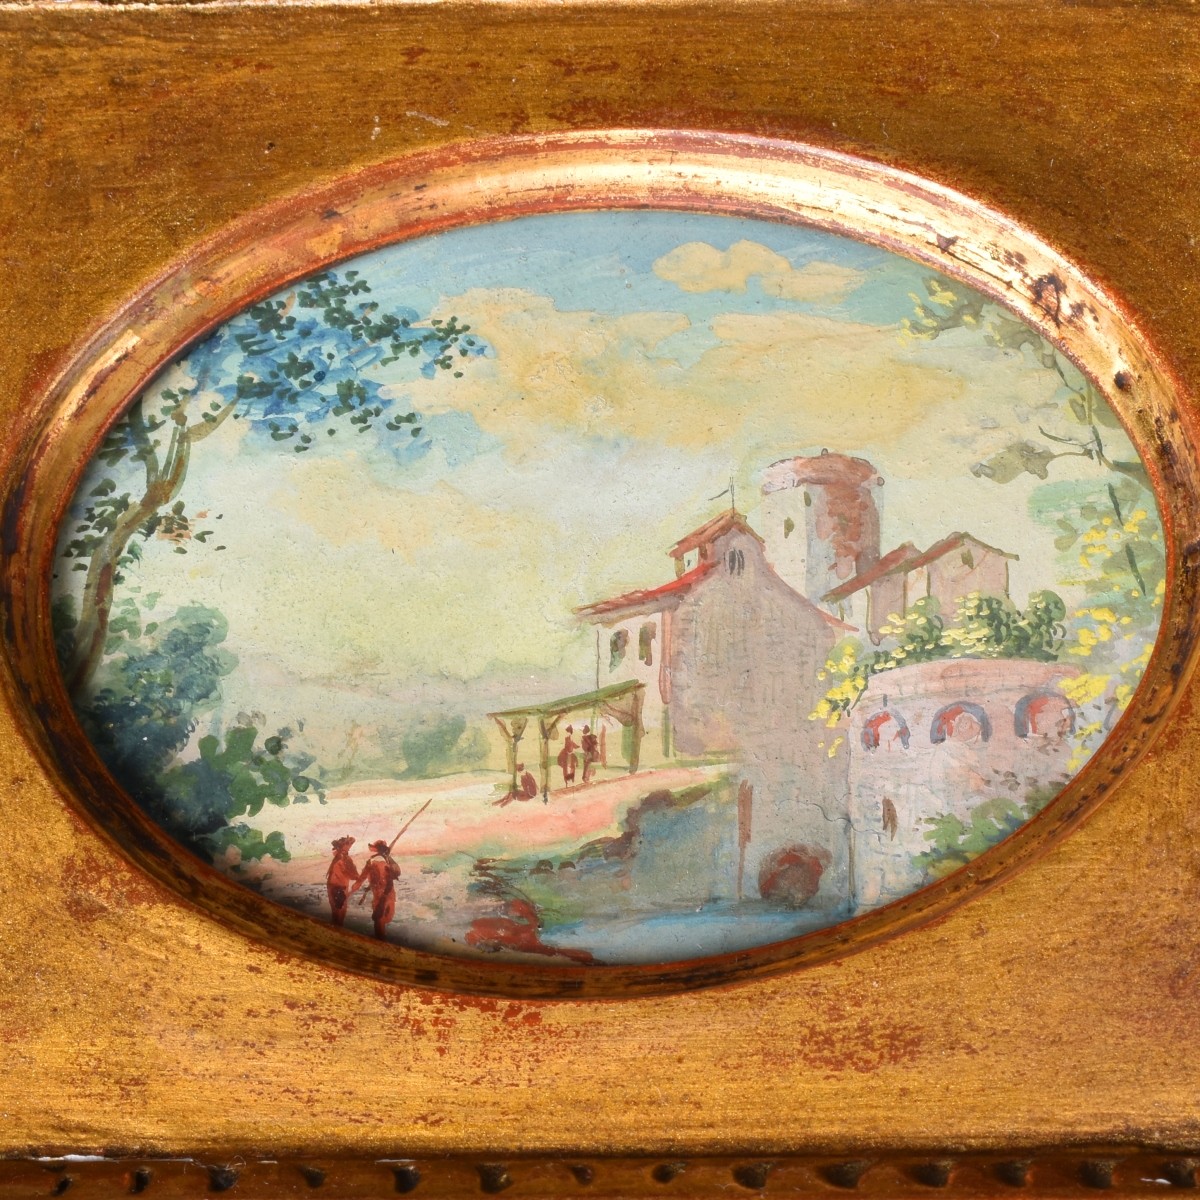 Seven Miniature Paintings